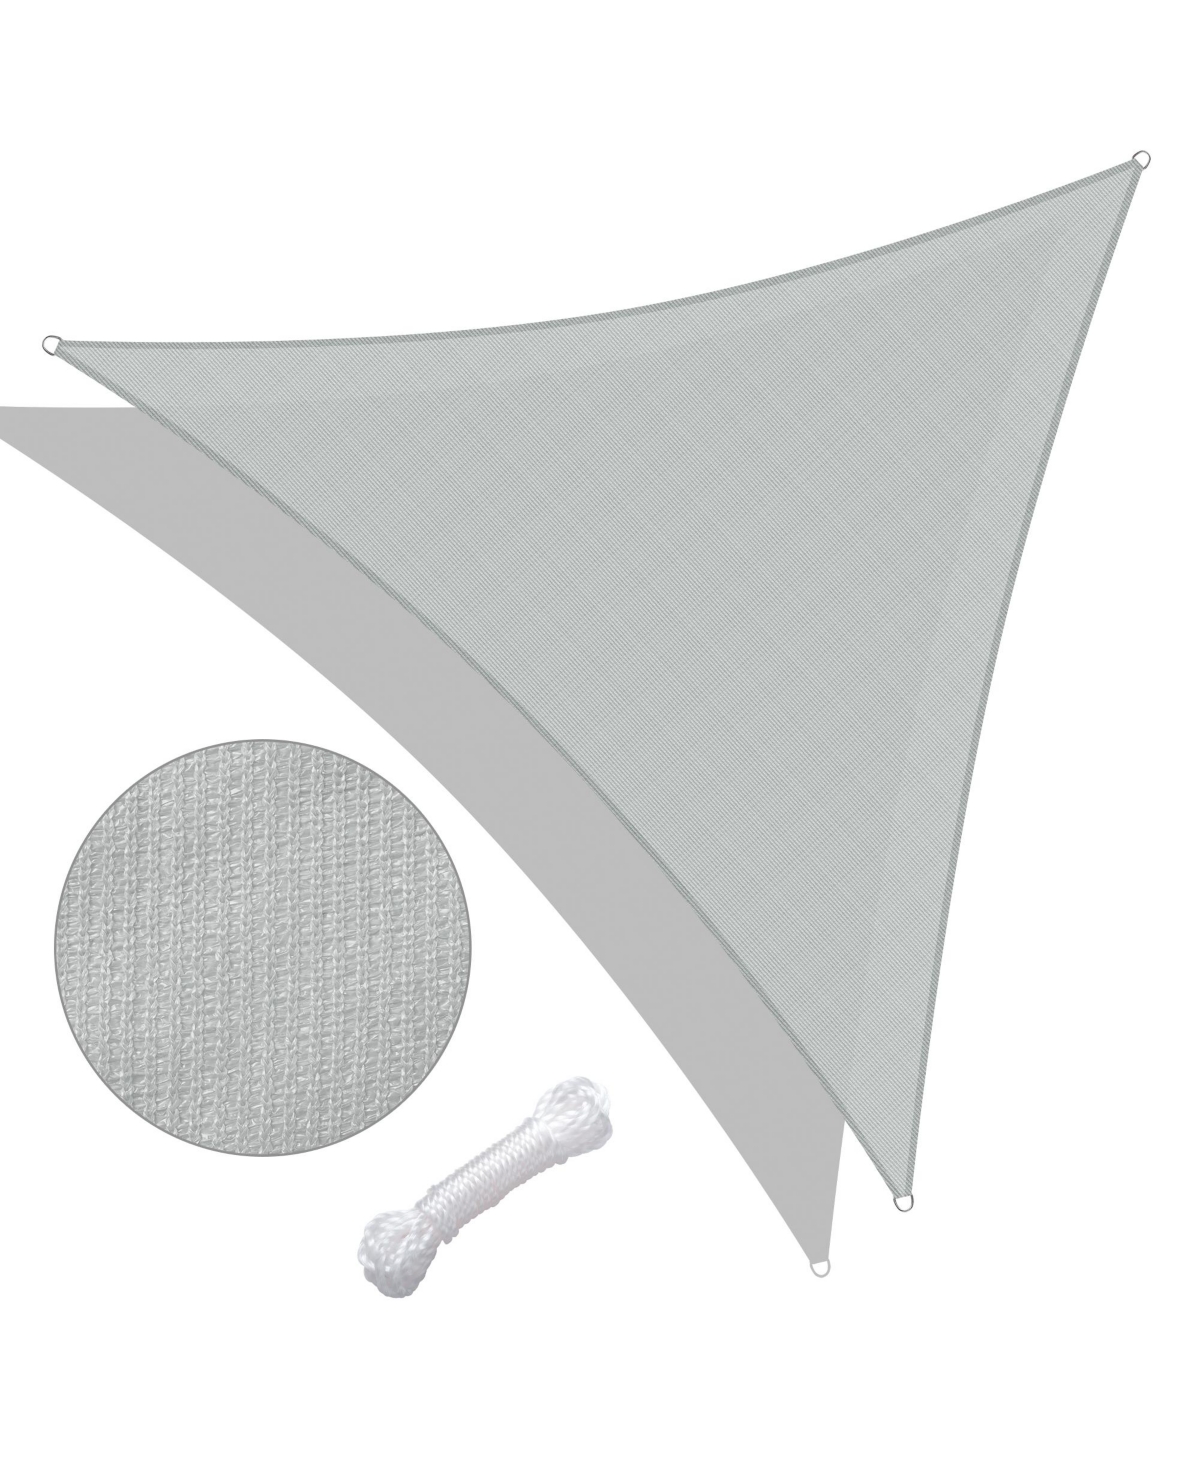 22 Ft 97% Uv Block Triangle Sun Shade Sail Canopy Cover Net Outdoor Patio Yard - Gray